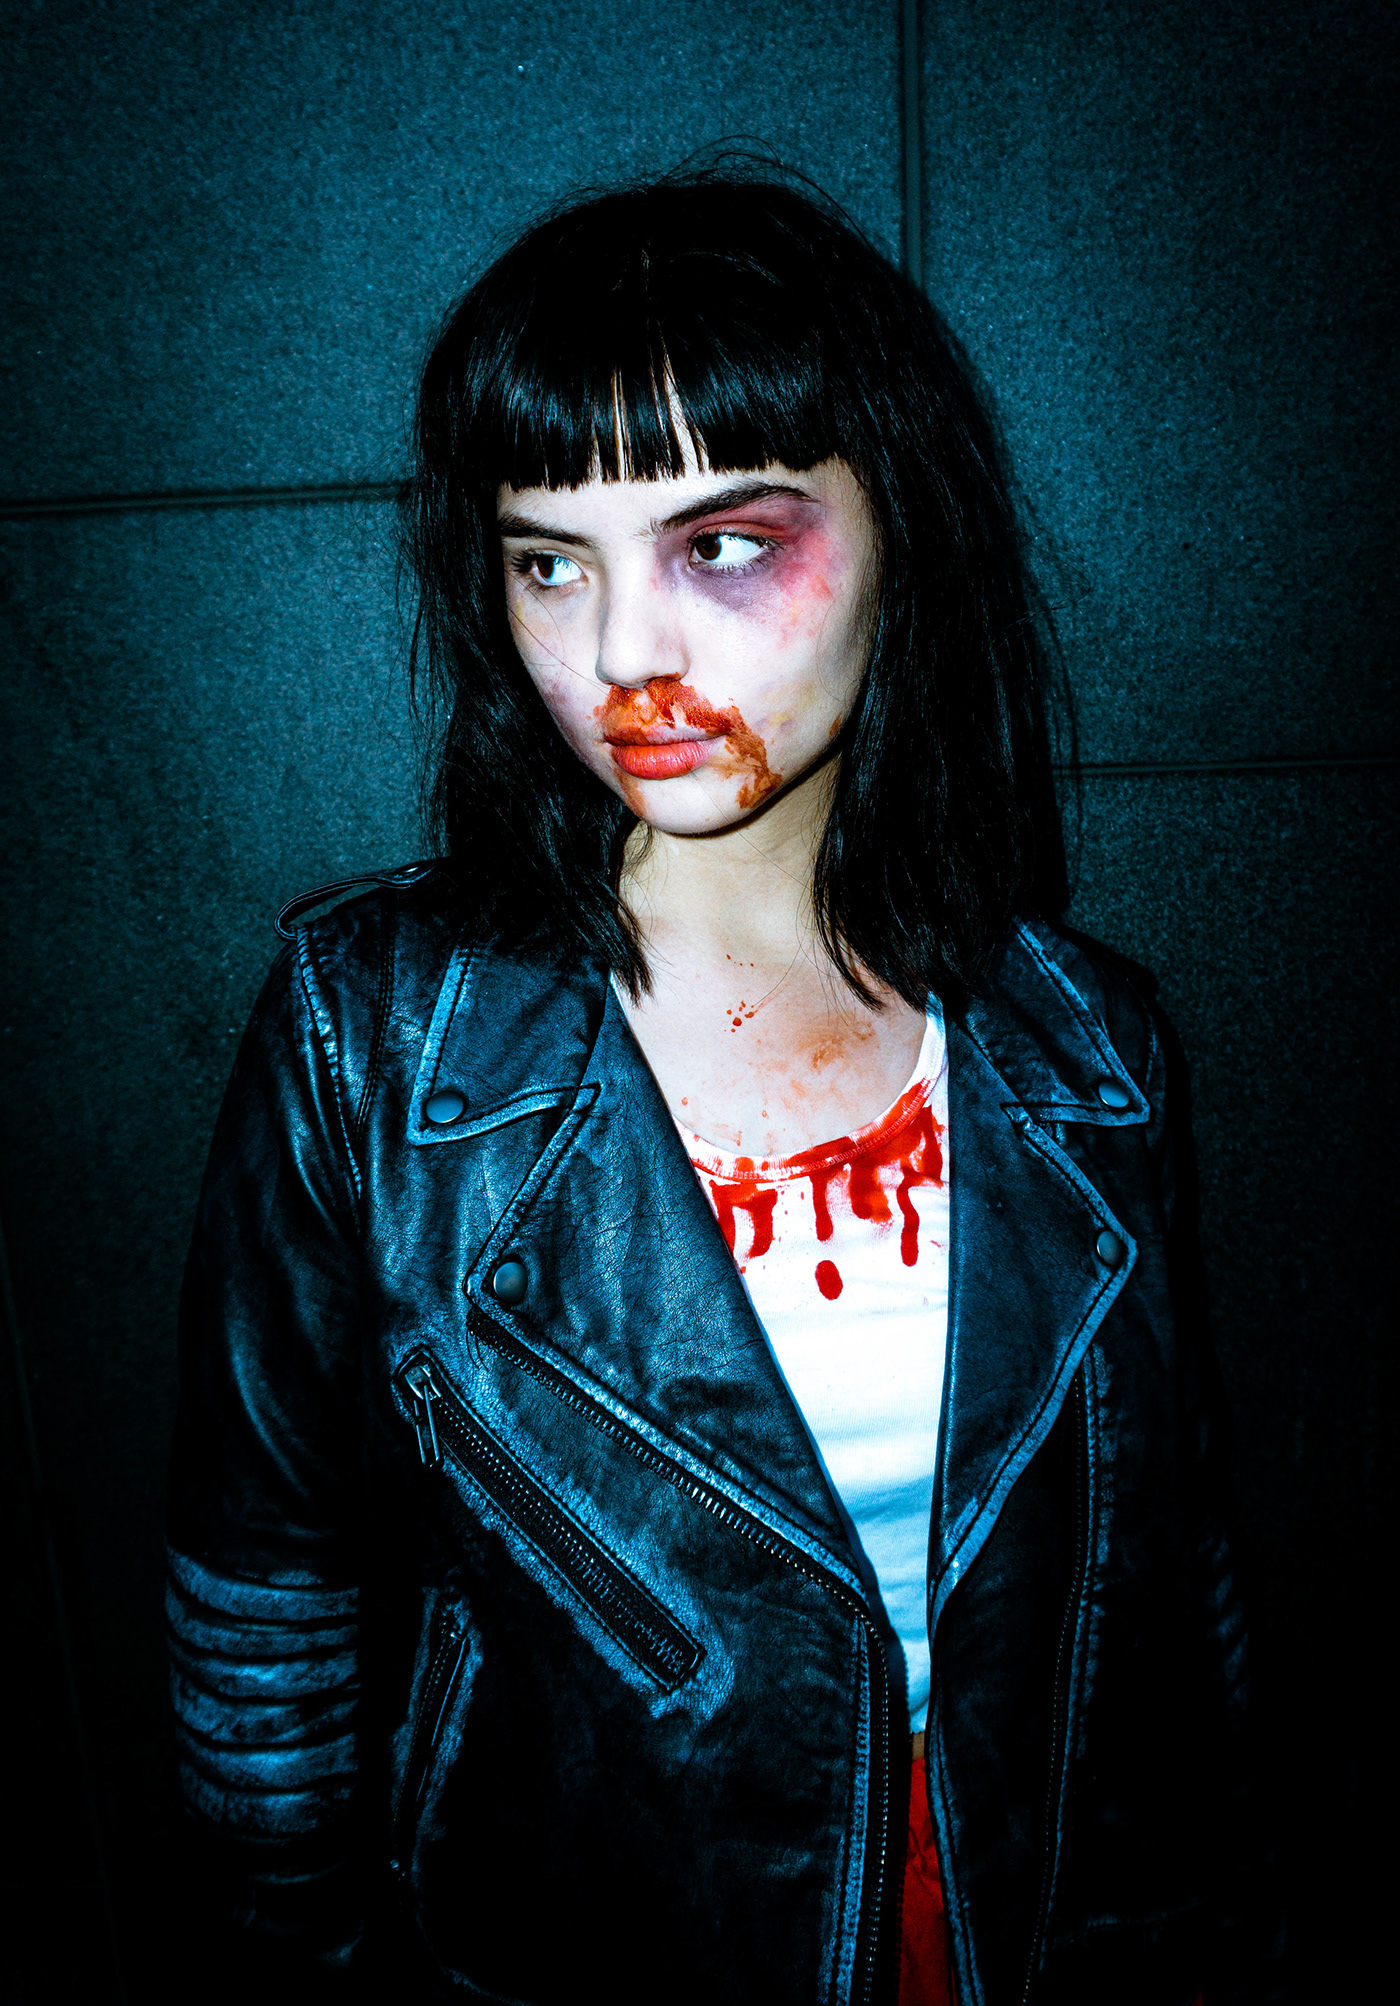 blood Fighter bad girl woman portraits strong biker photo shoot Flash attitude